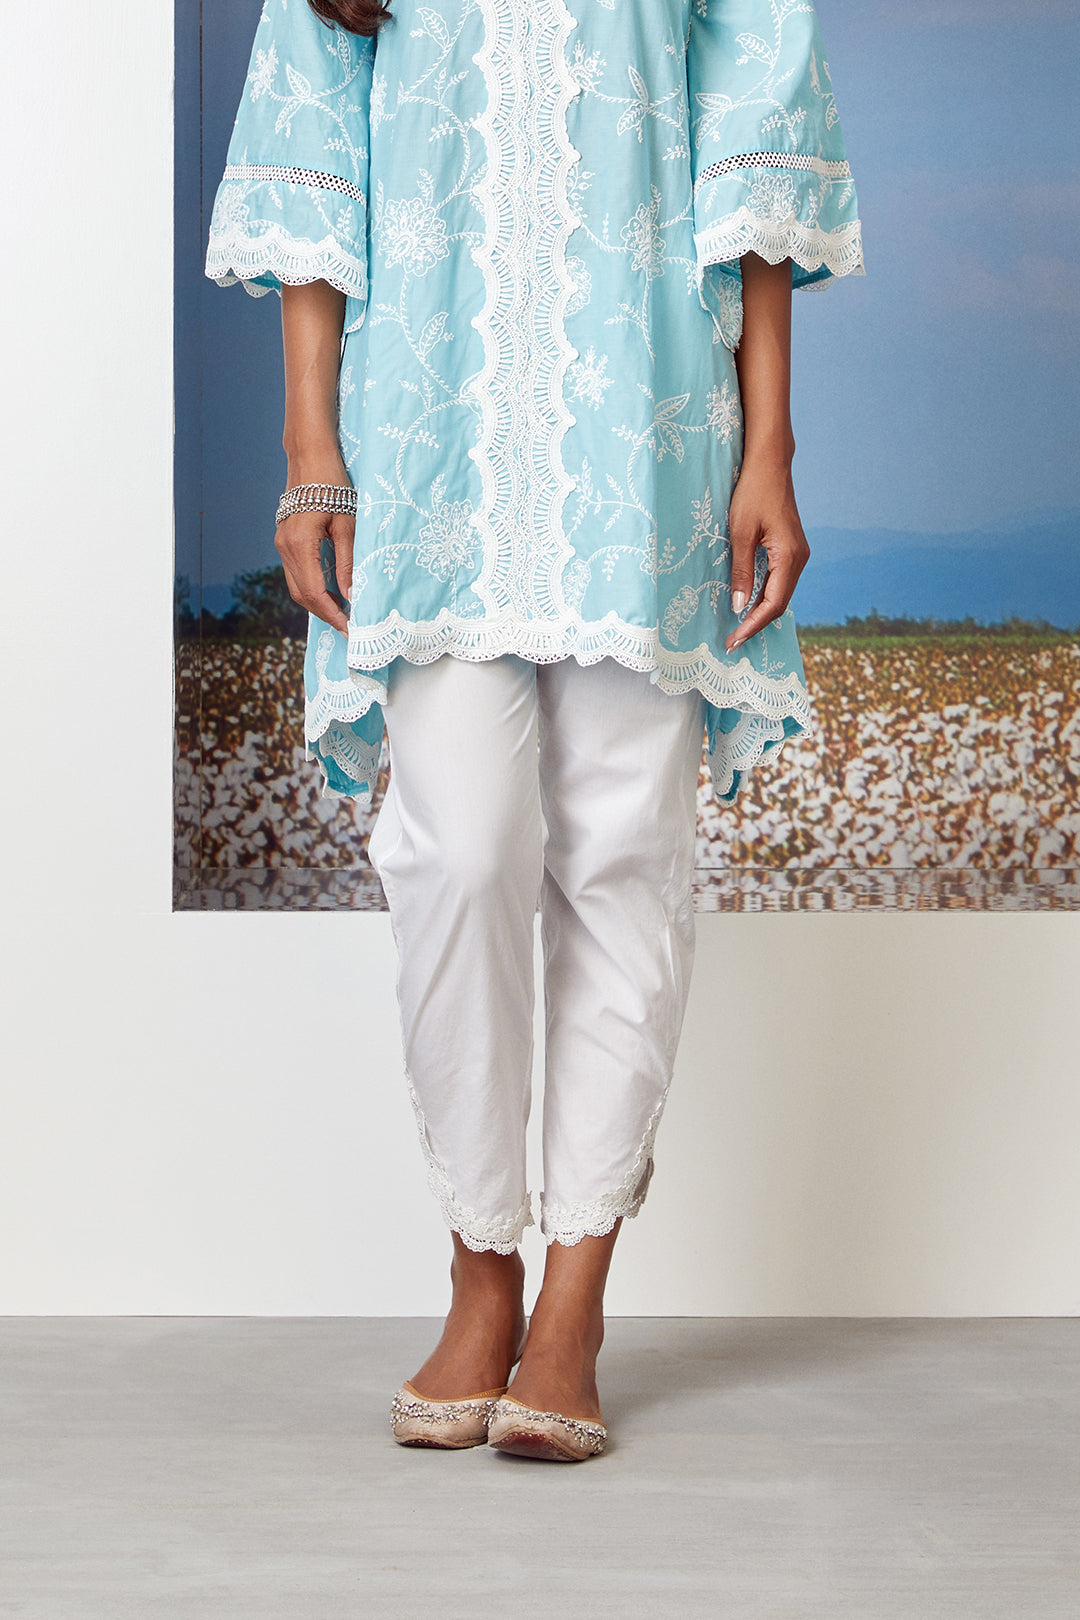 Mulmul Cotton Tiffany Turq Kurta With Rounded Hem White Pyajama